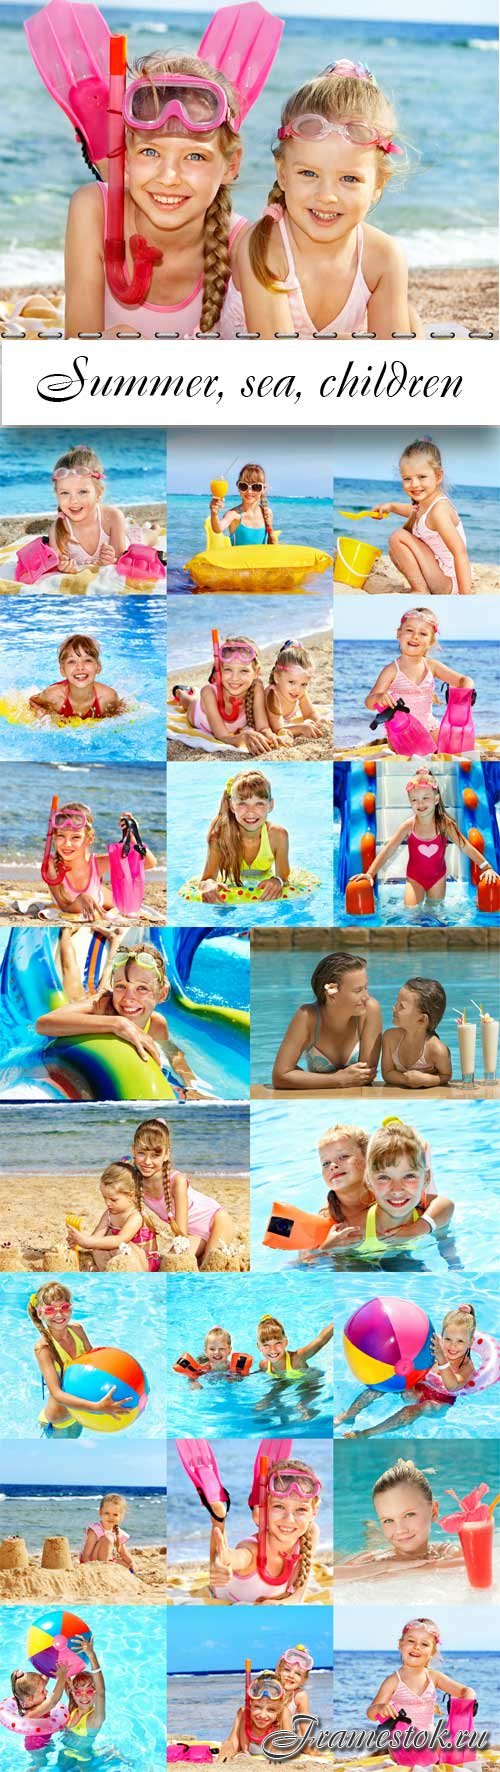 Children of the sea summer